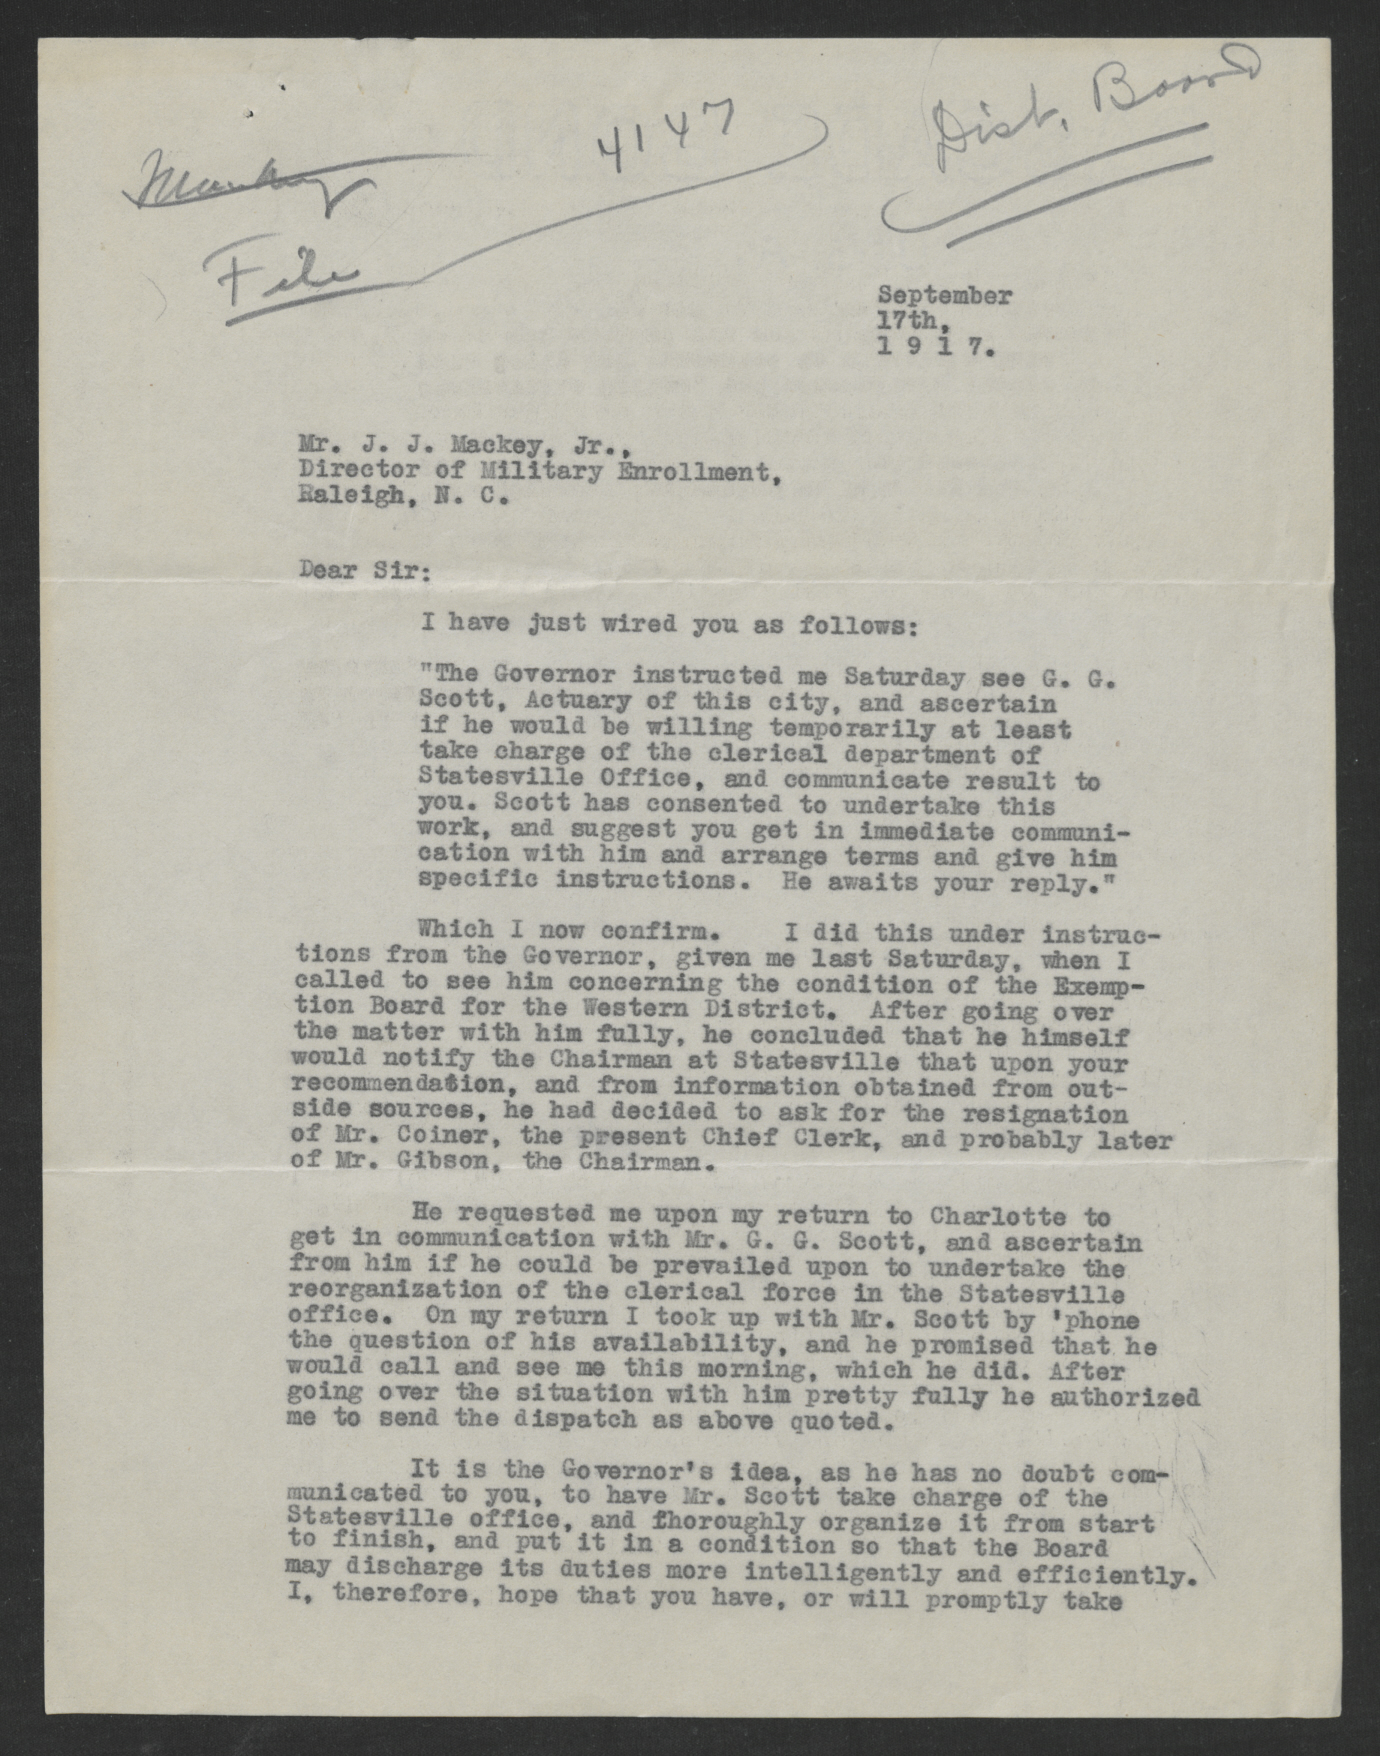 Letter from Edwin T. Cansler to Joseph J. Mackay, Jr., September 17, 1917, page 1